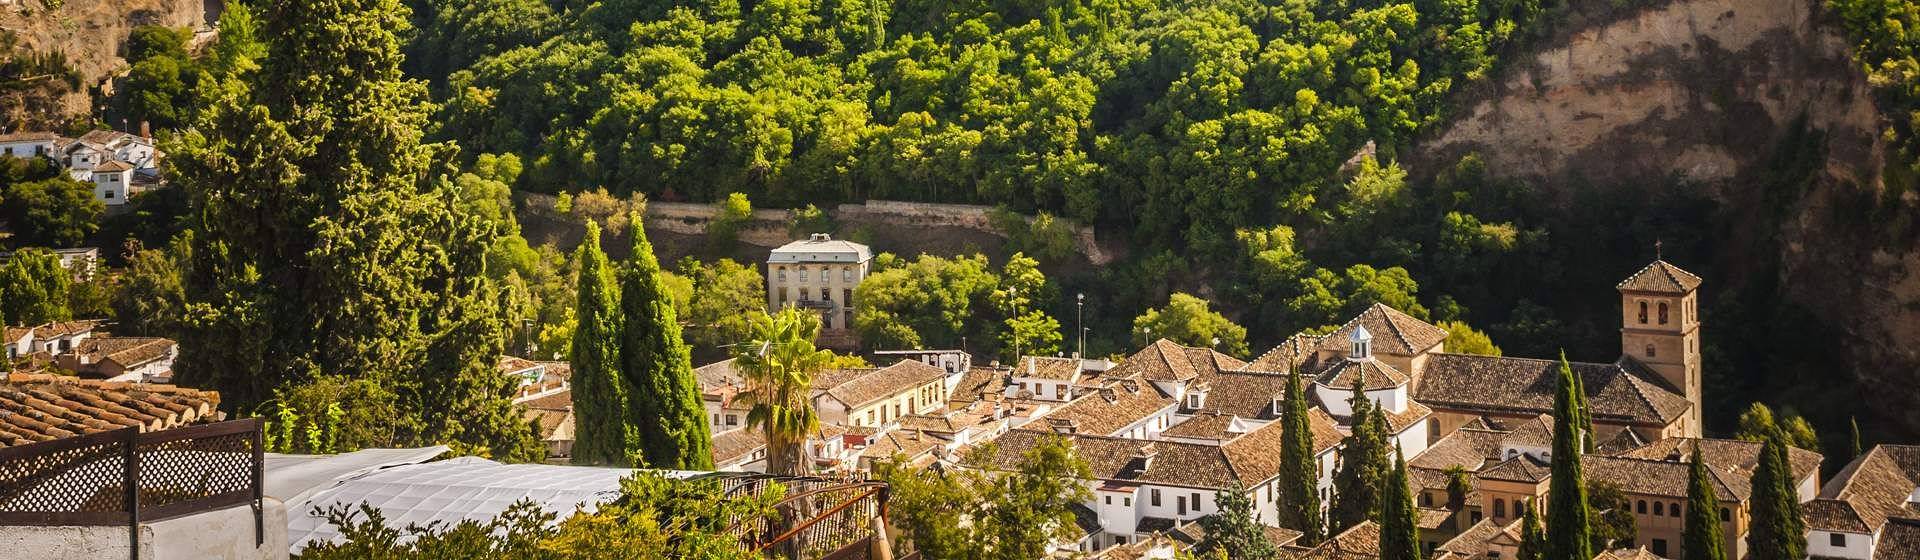 Holidays to Granada Image